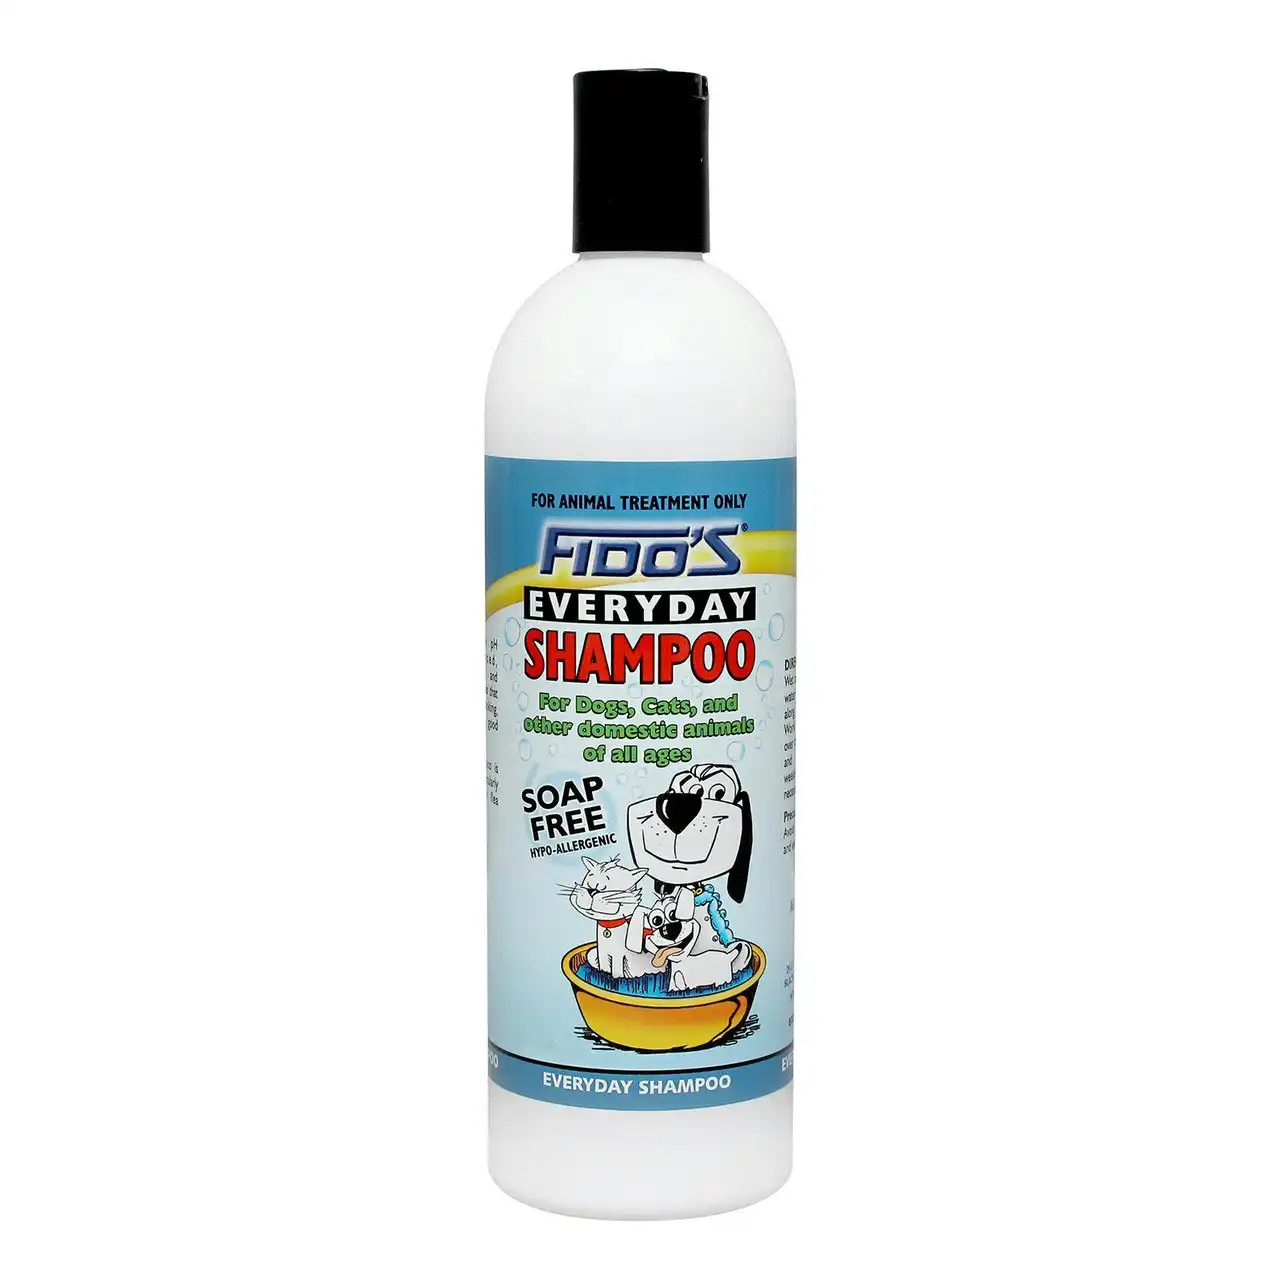 Fido's Everyday Shampoo 250ml